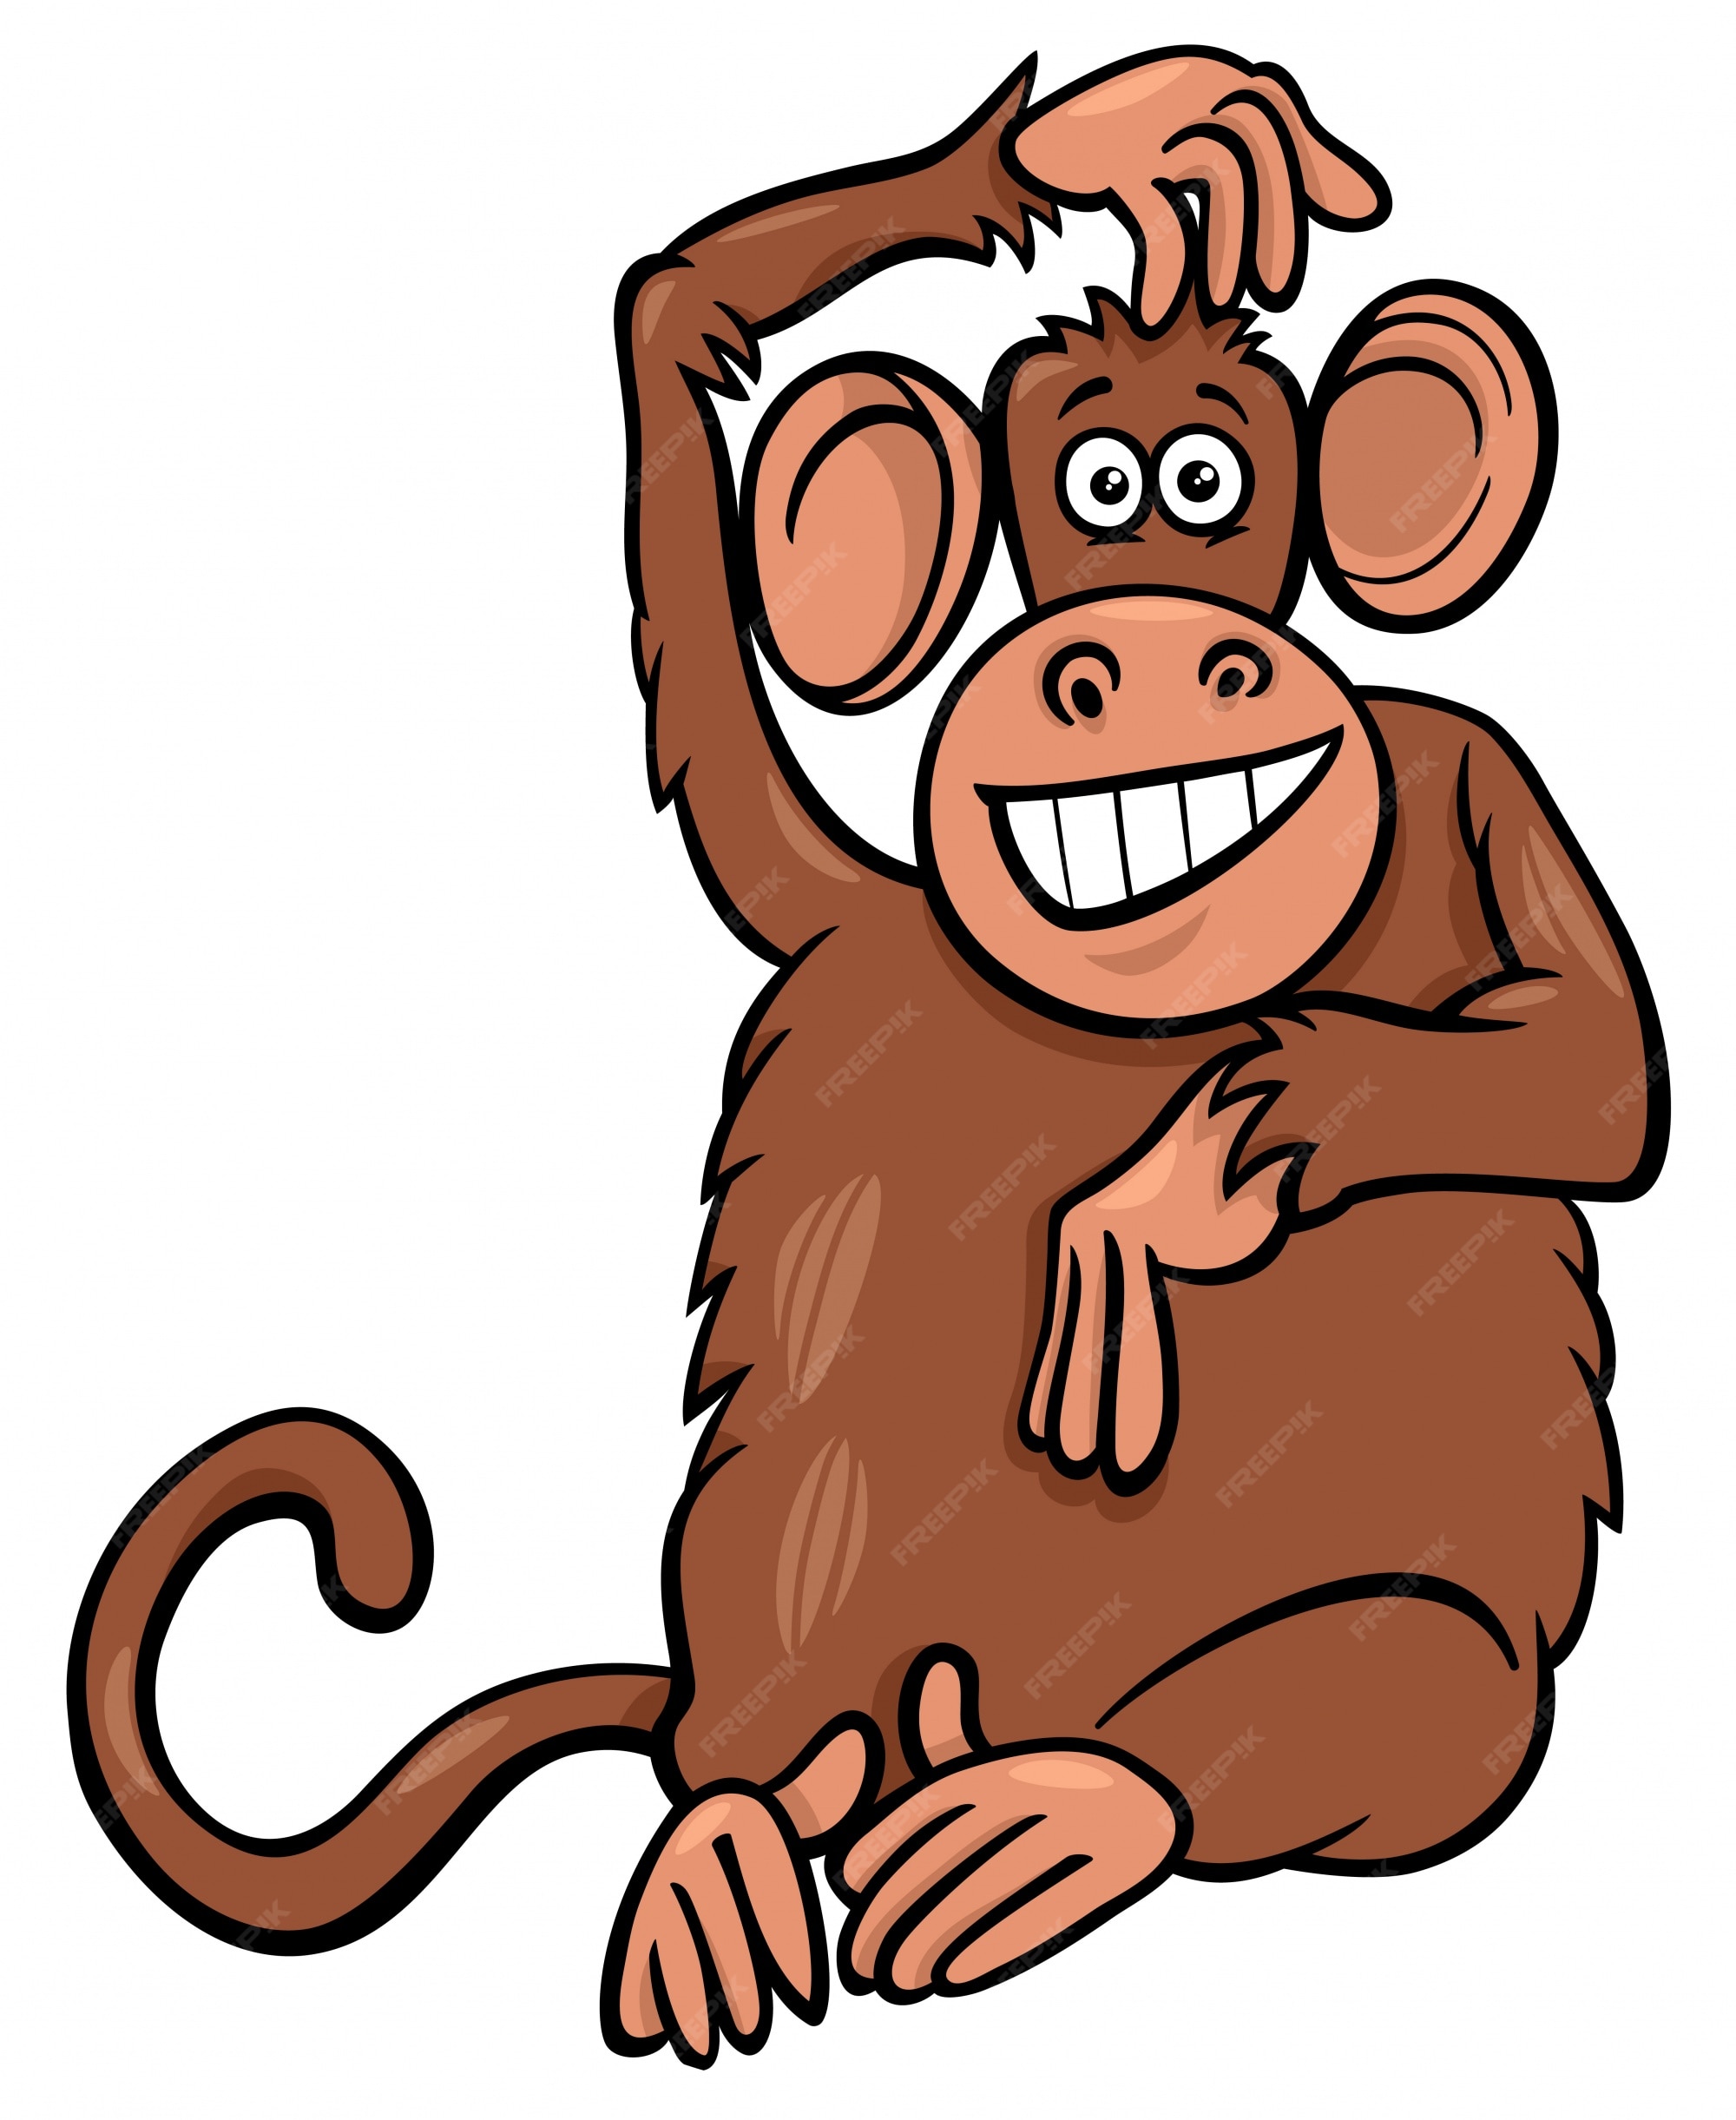 Premium Vector | Monkey cartoon character